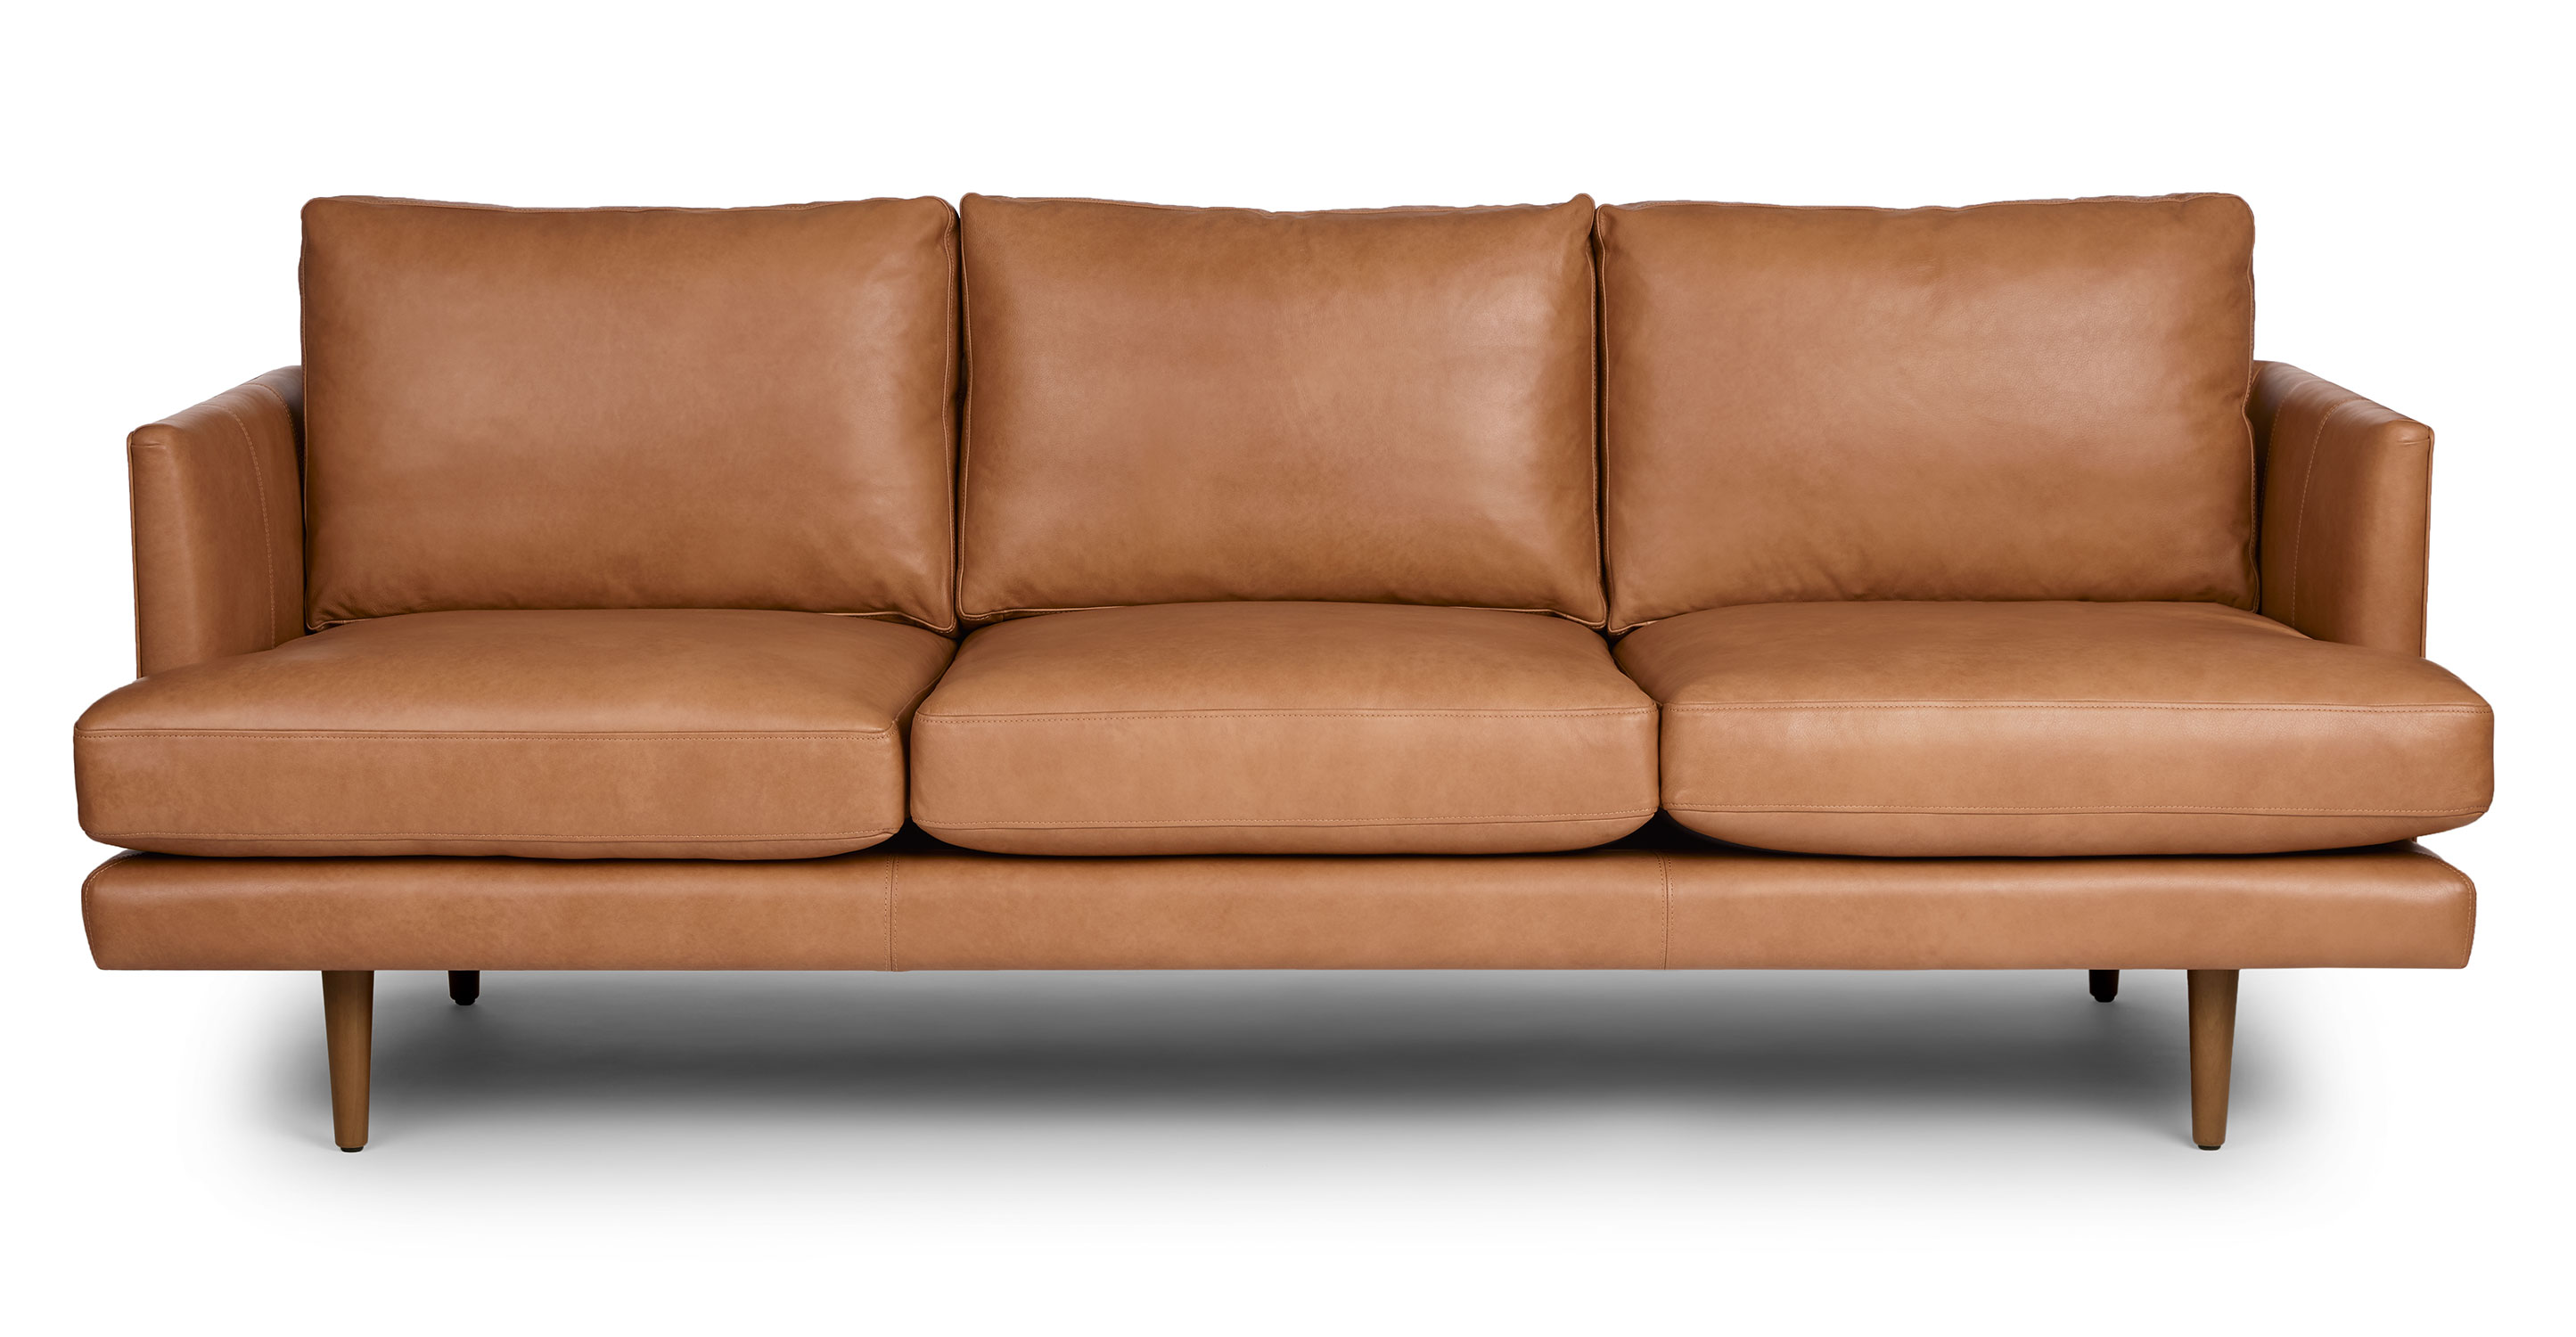 Burrard Walnut &Belle Caramel Leather Seater 3 Sofa Article 